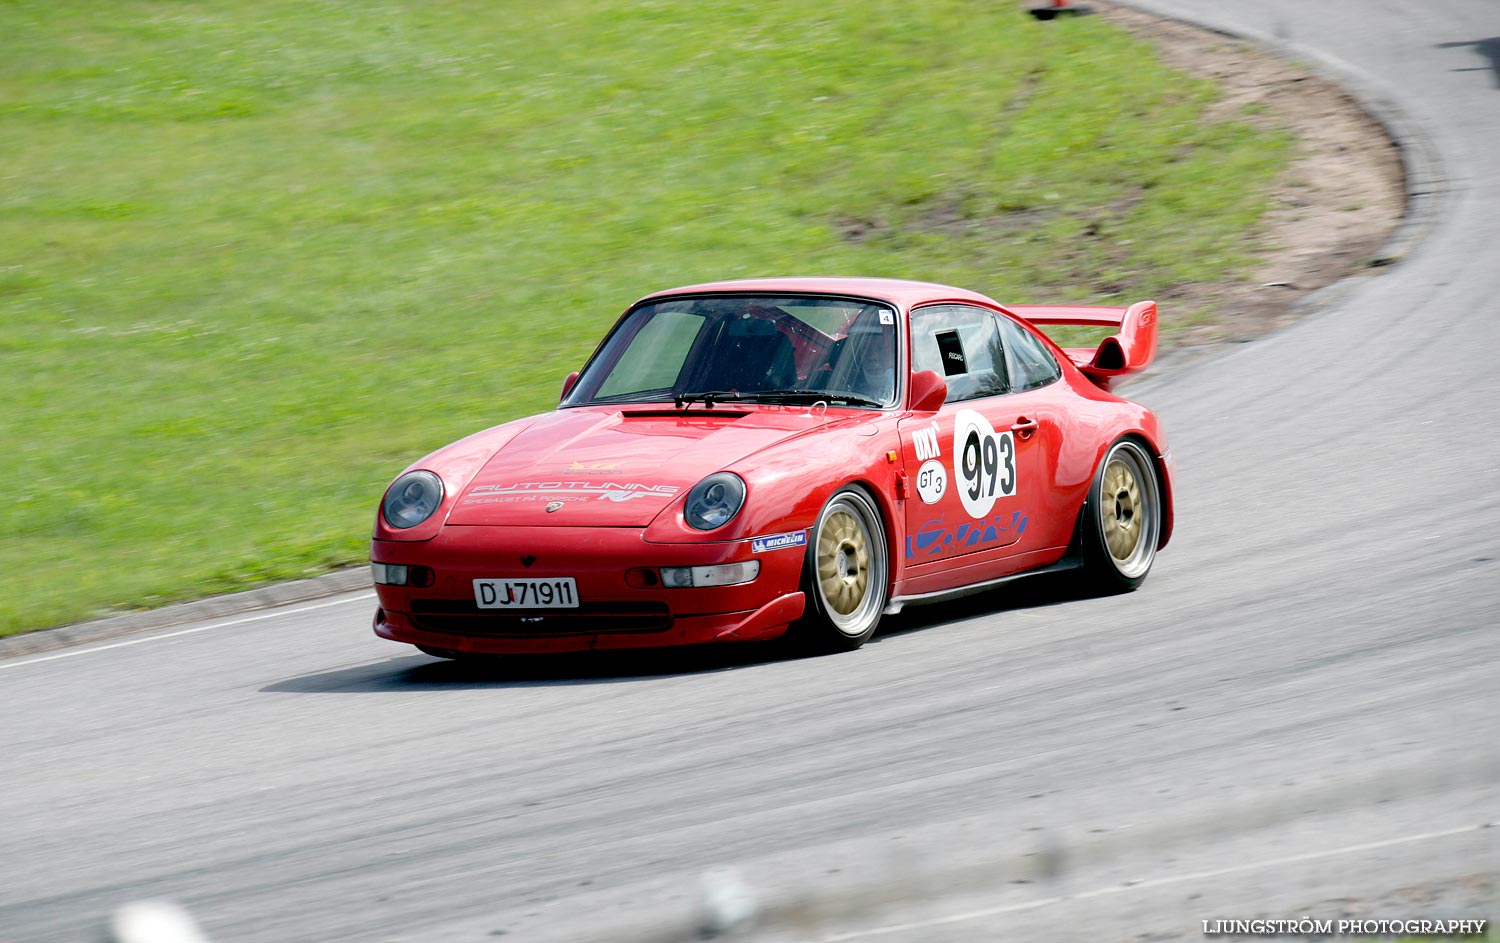 SSK Raceweek,mix,Kinnekulle Ring,Götene,Sverige,Motorsport,,2009,107535